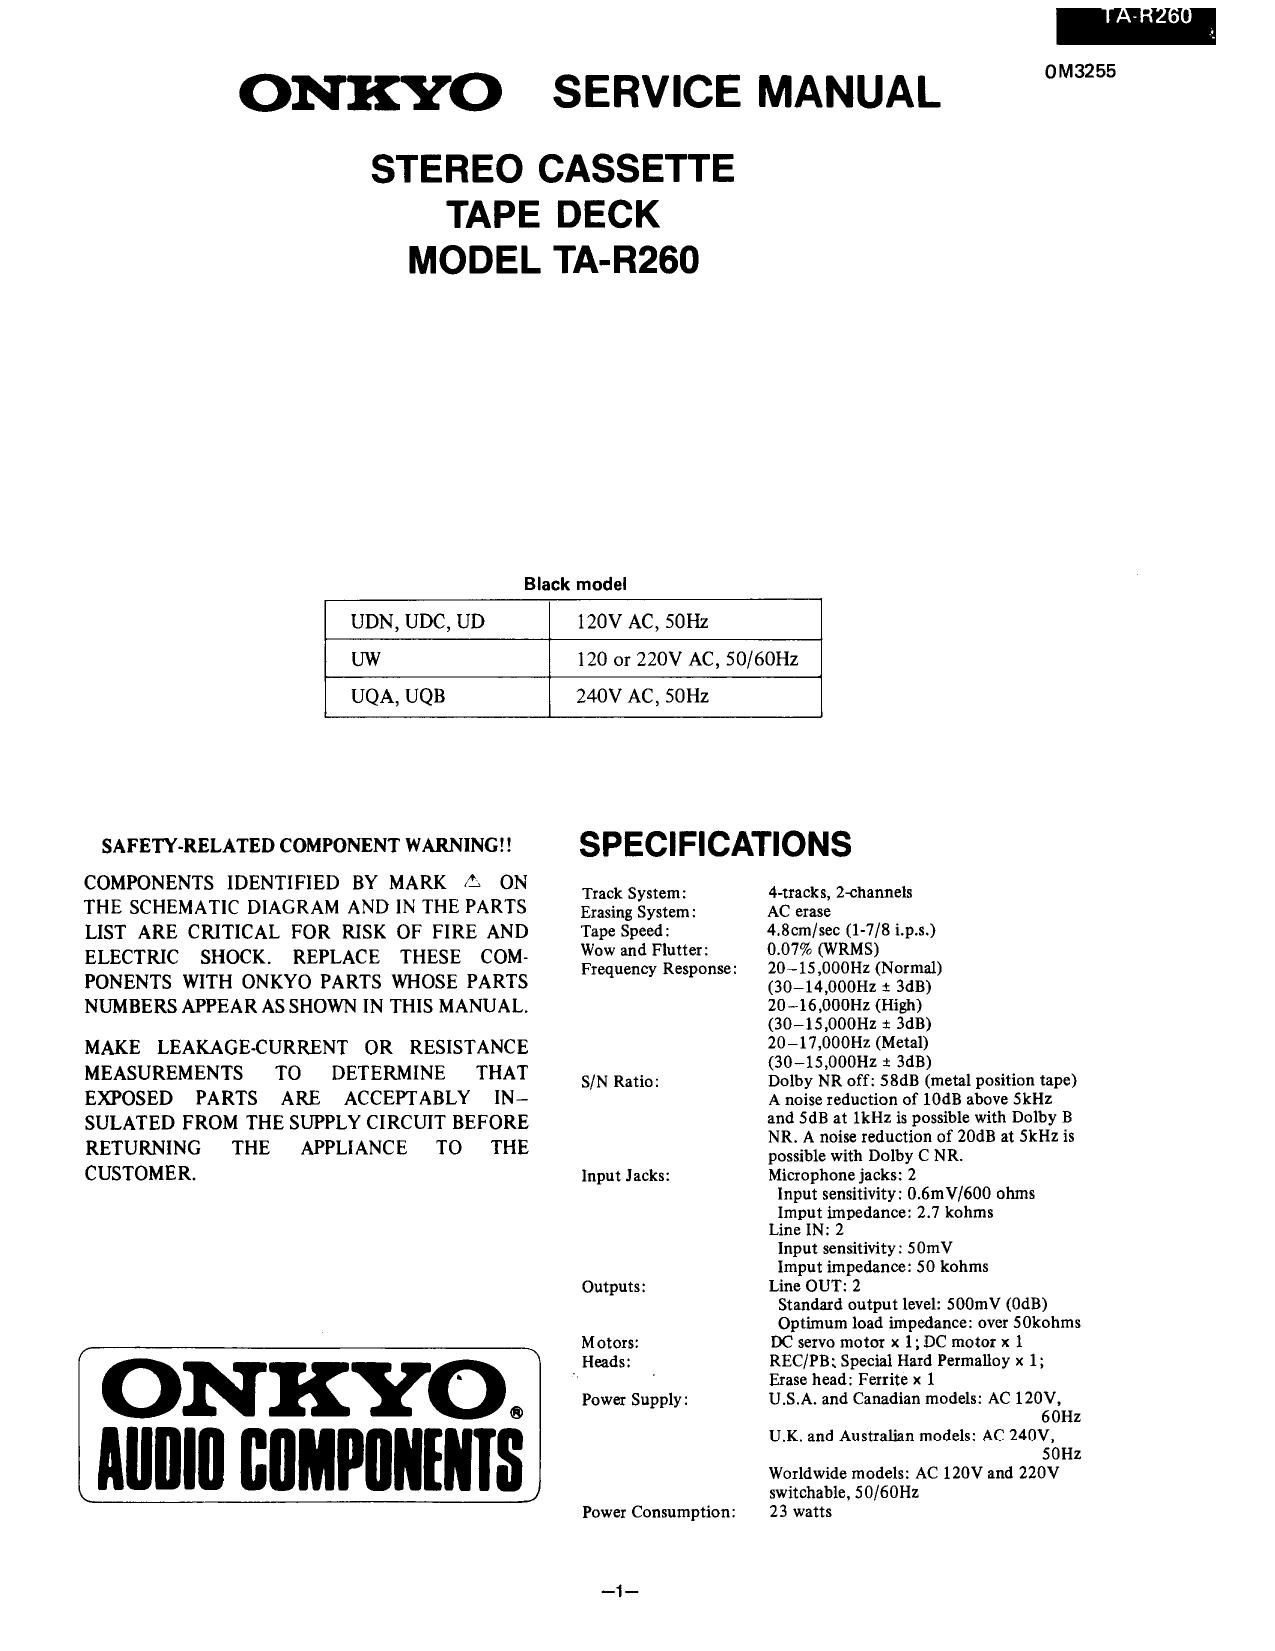 Onkyo TAR 260 Service Manual